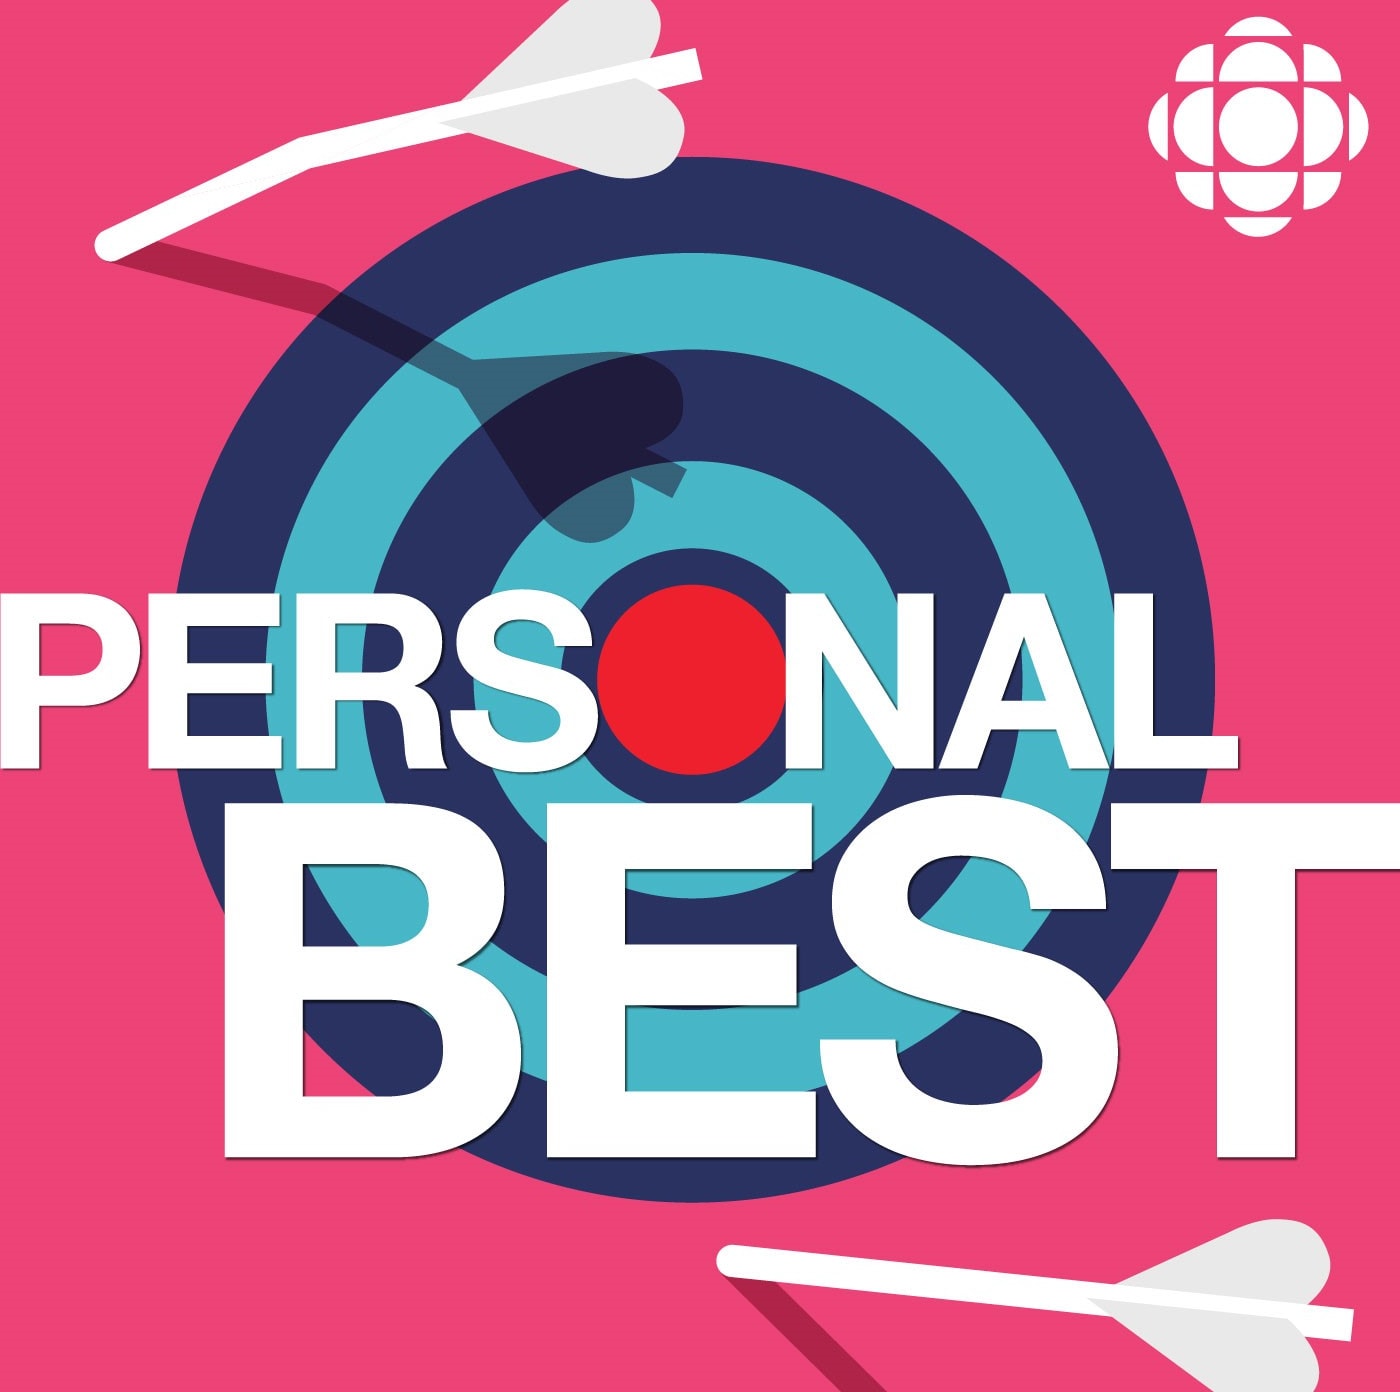 Personal Best logo (Supplied)